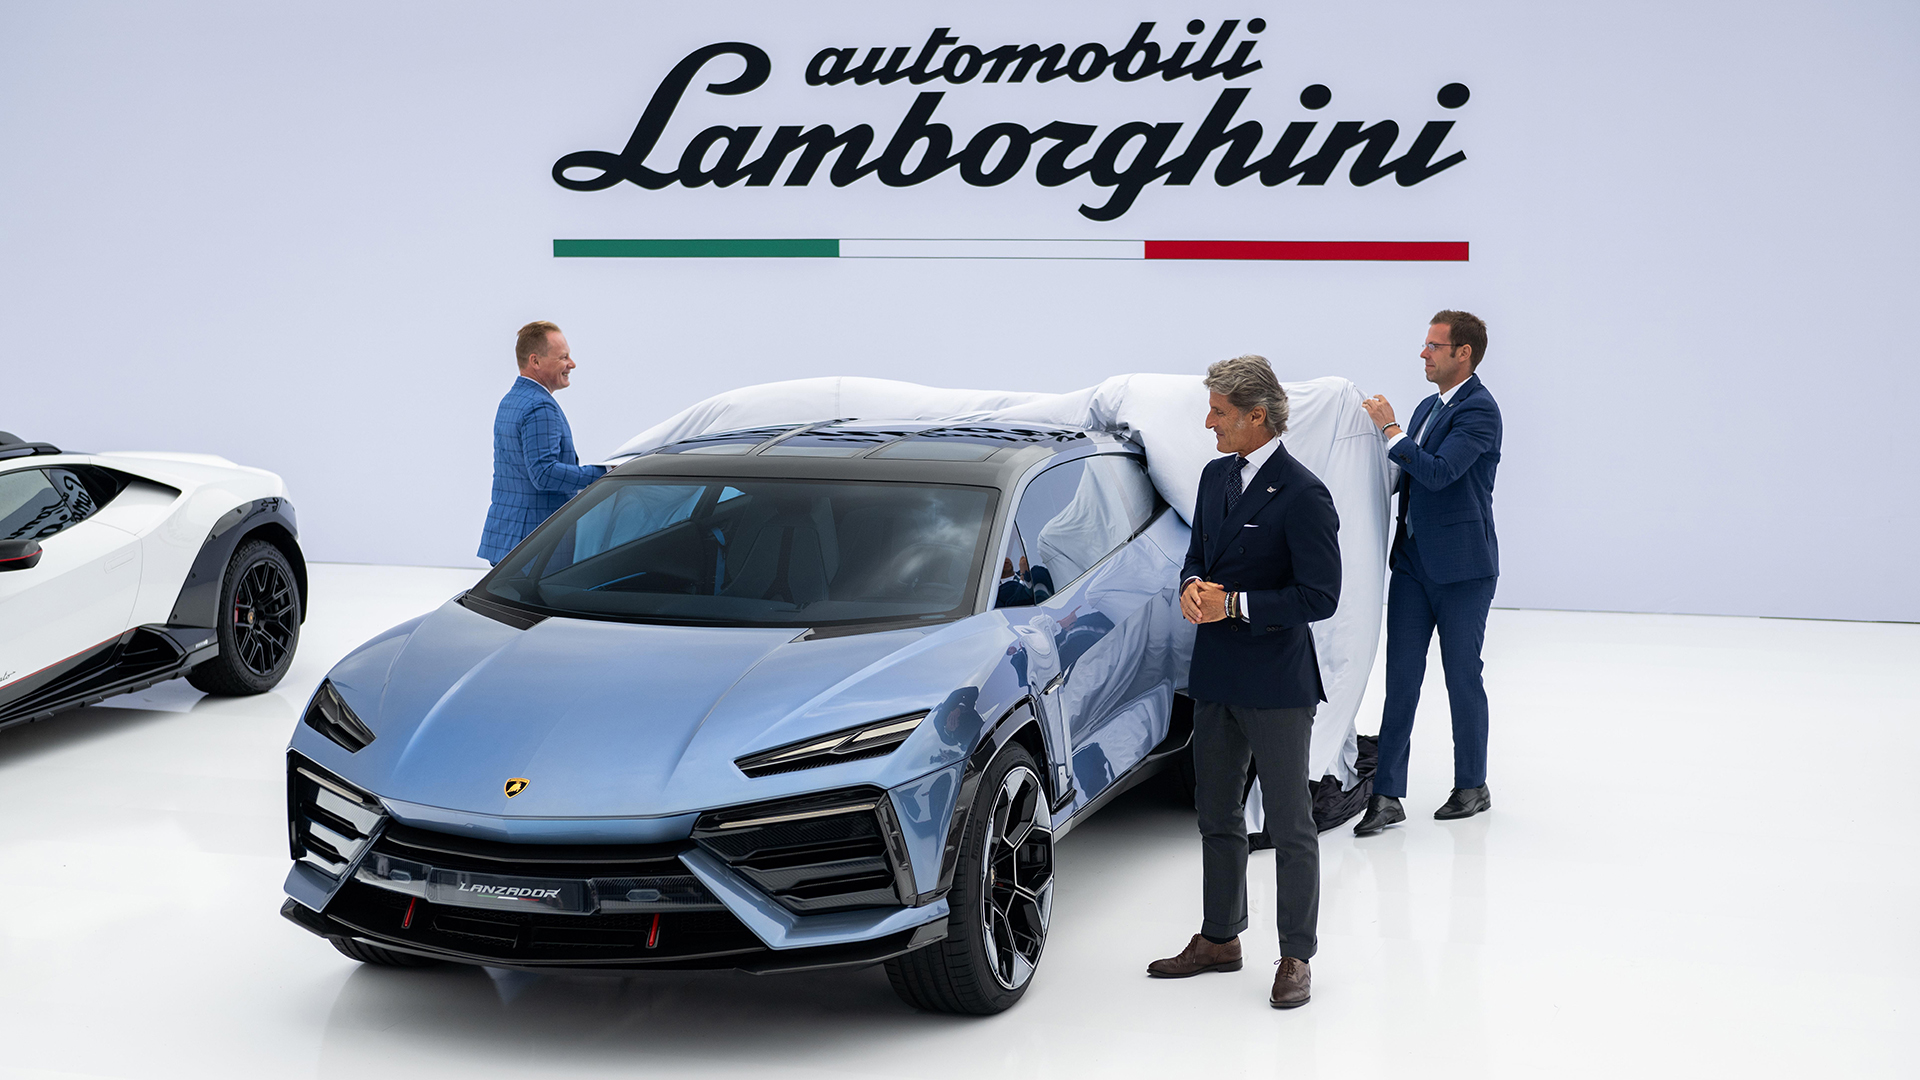 Introducing Lanzador – The first Lamborghini all-electric car